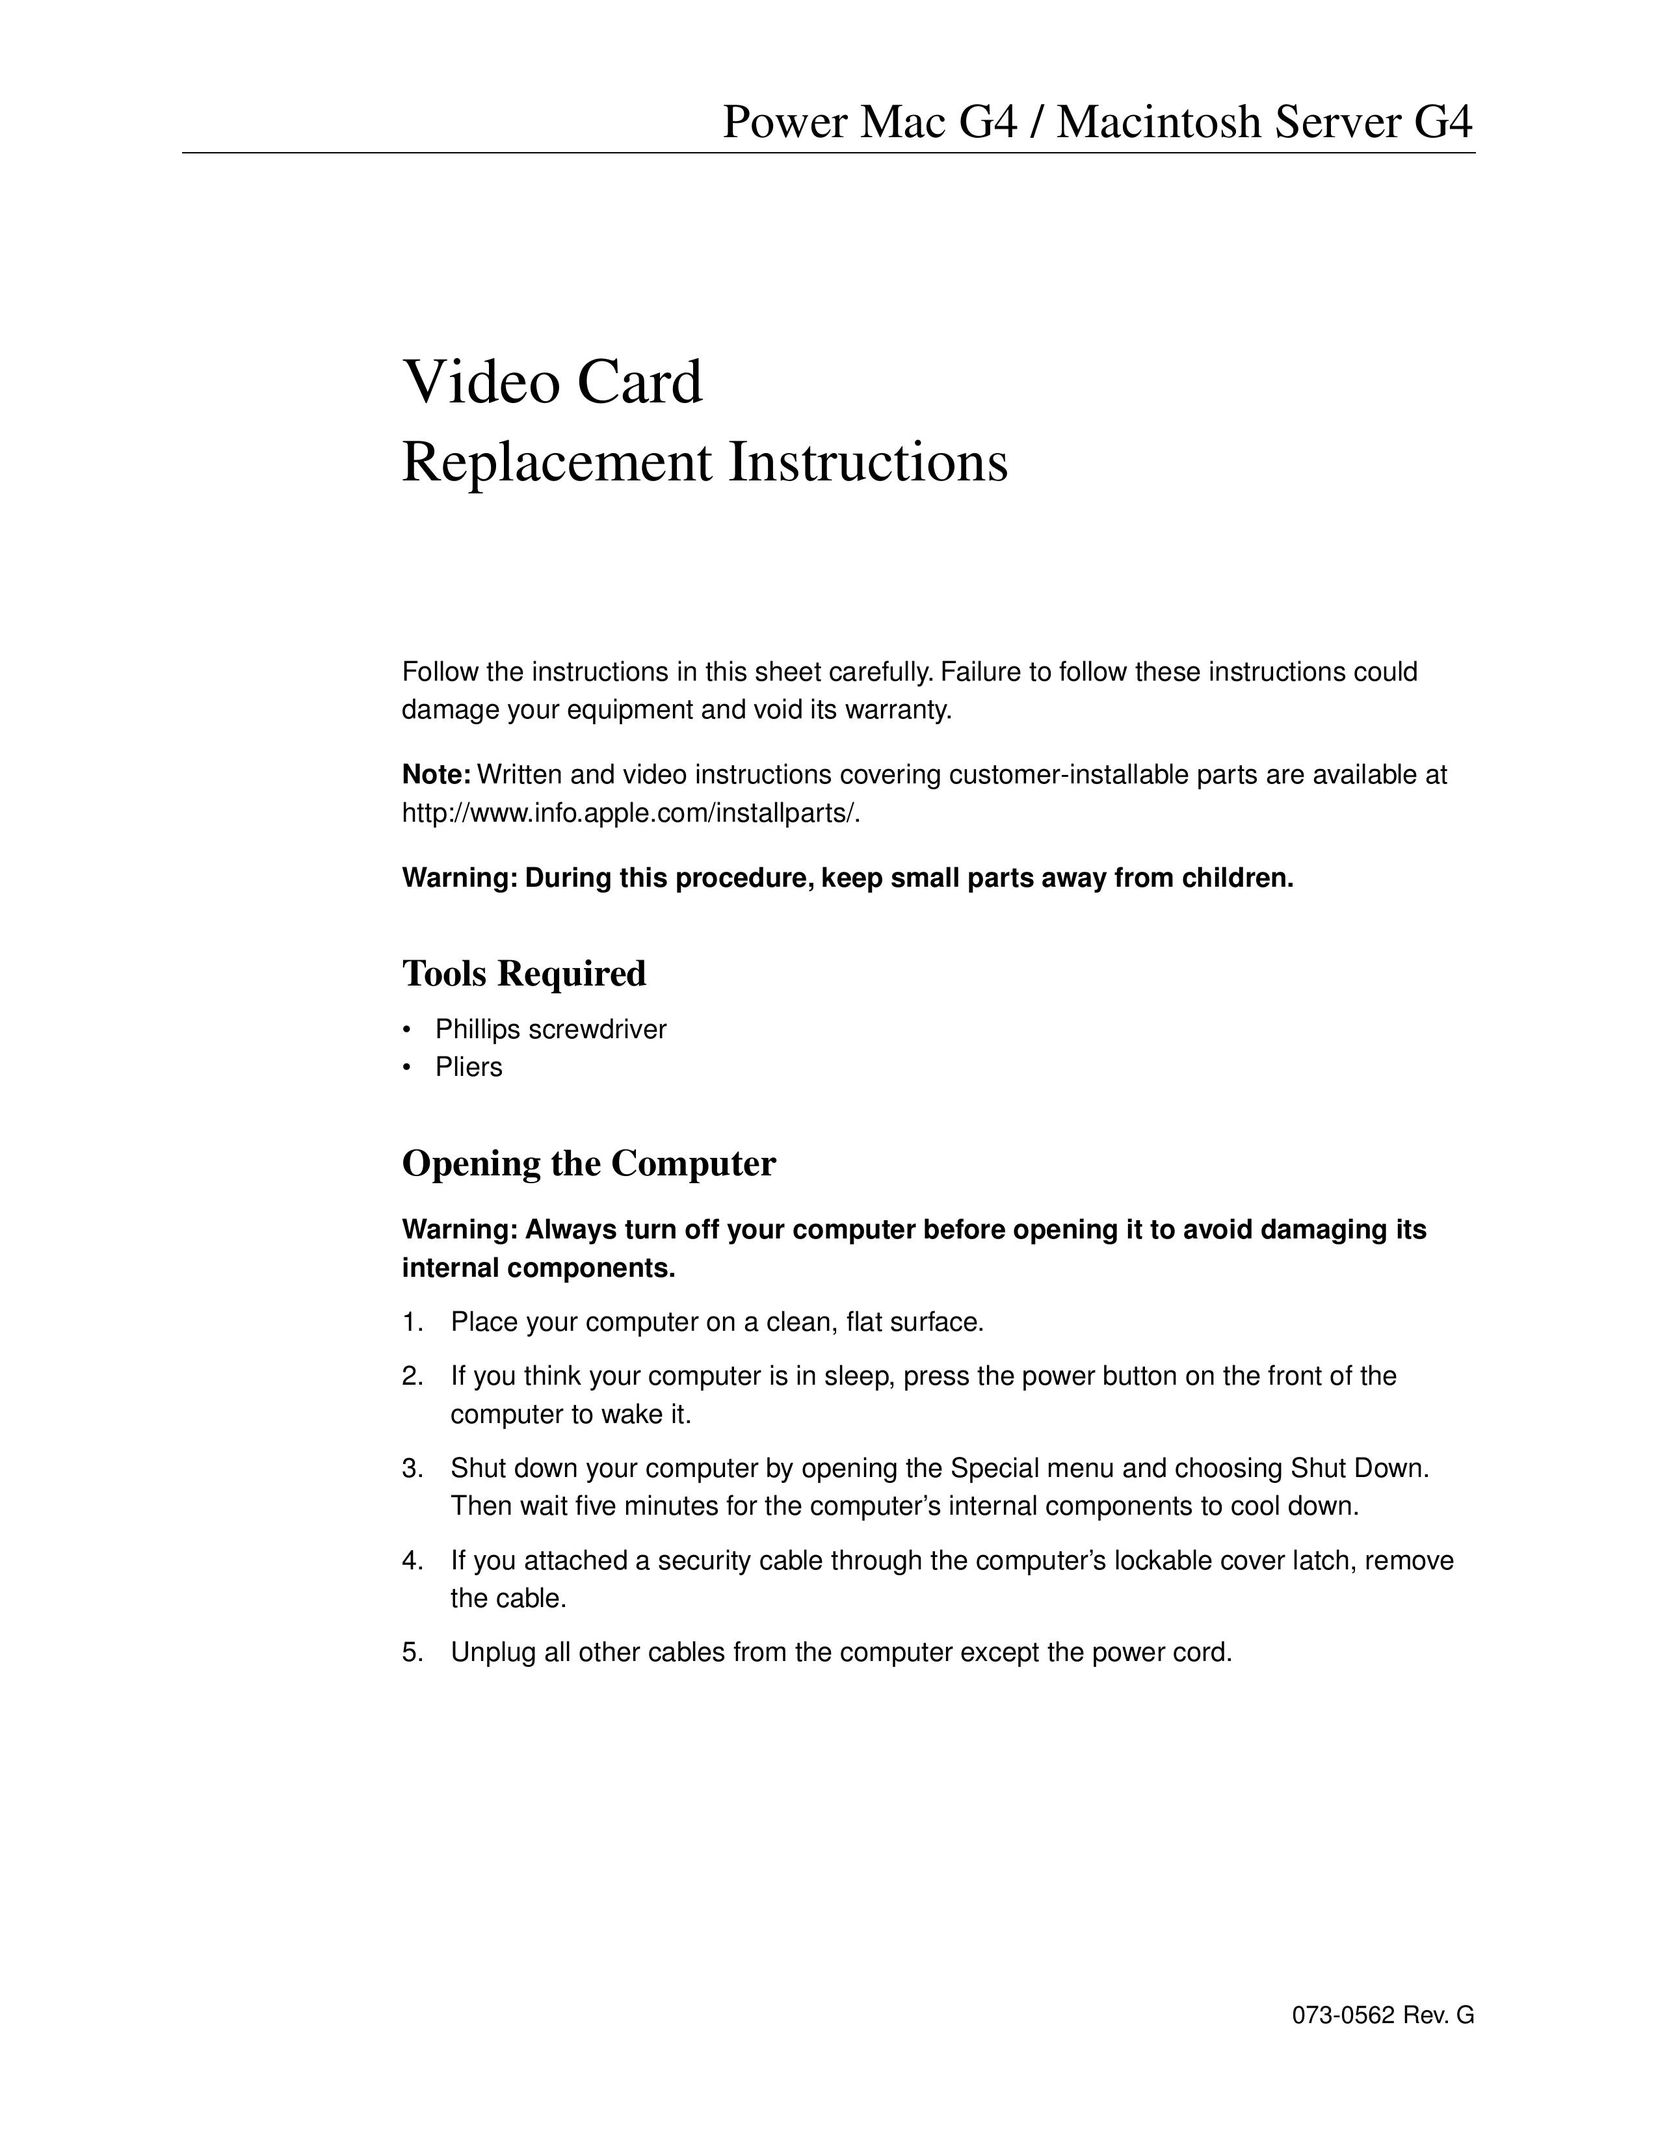 Apple Video Card Network Card User Manual